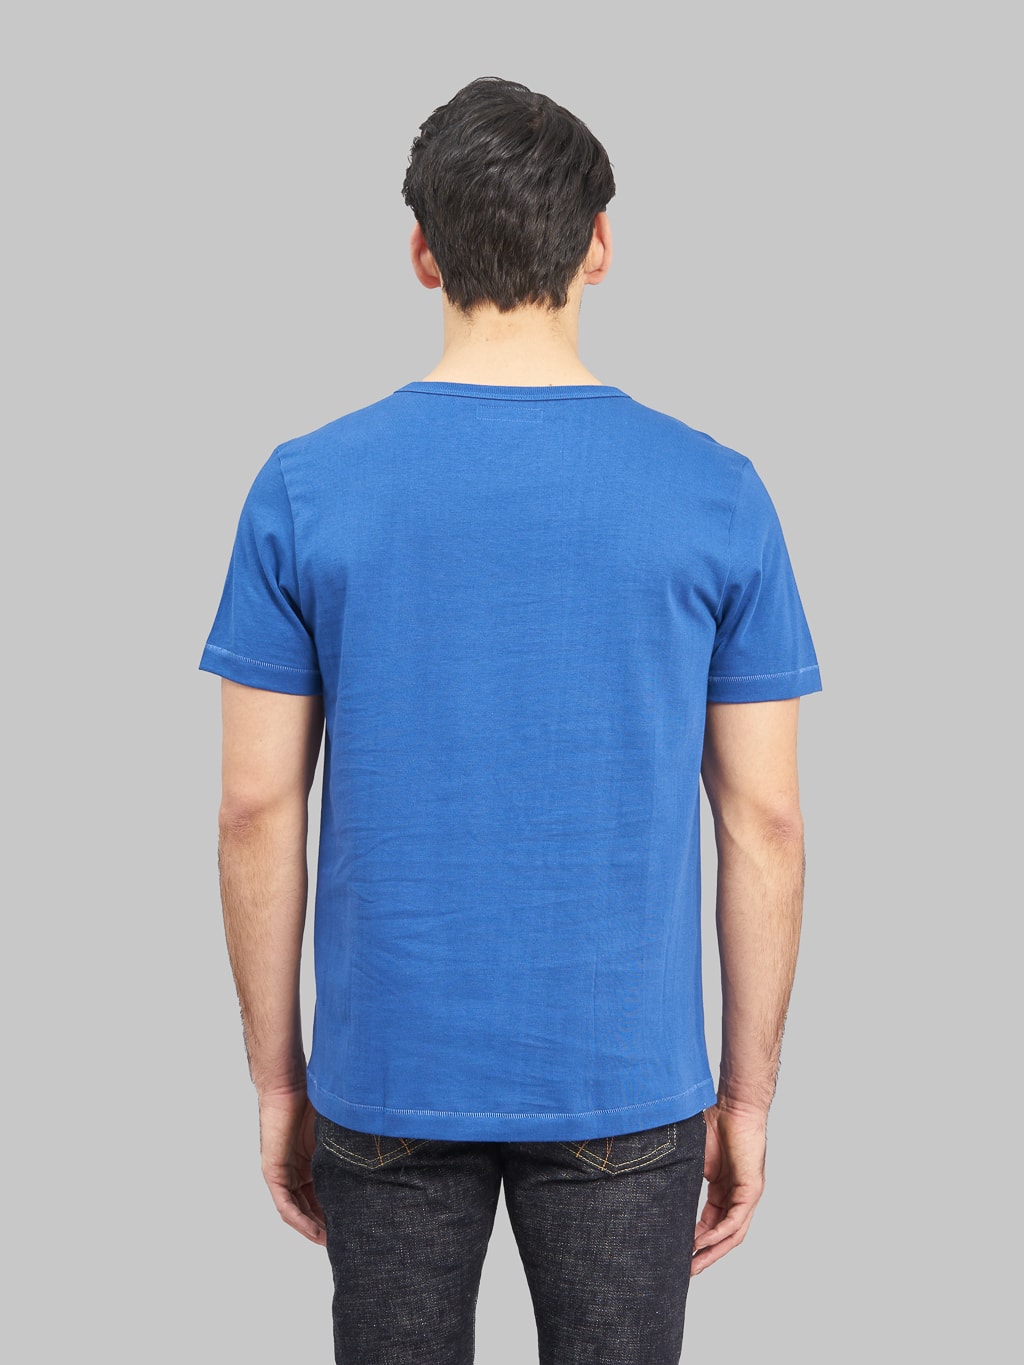 merz b schwanen 215 heavyweight loopwheeled tshirt vintage blue back fit